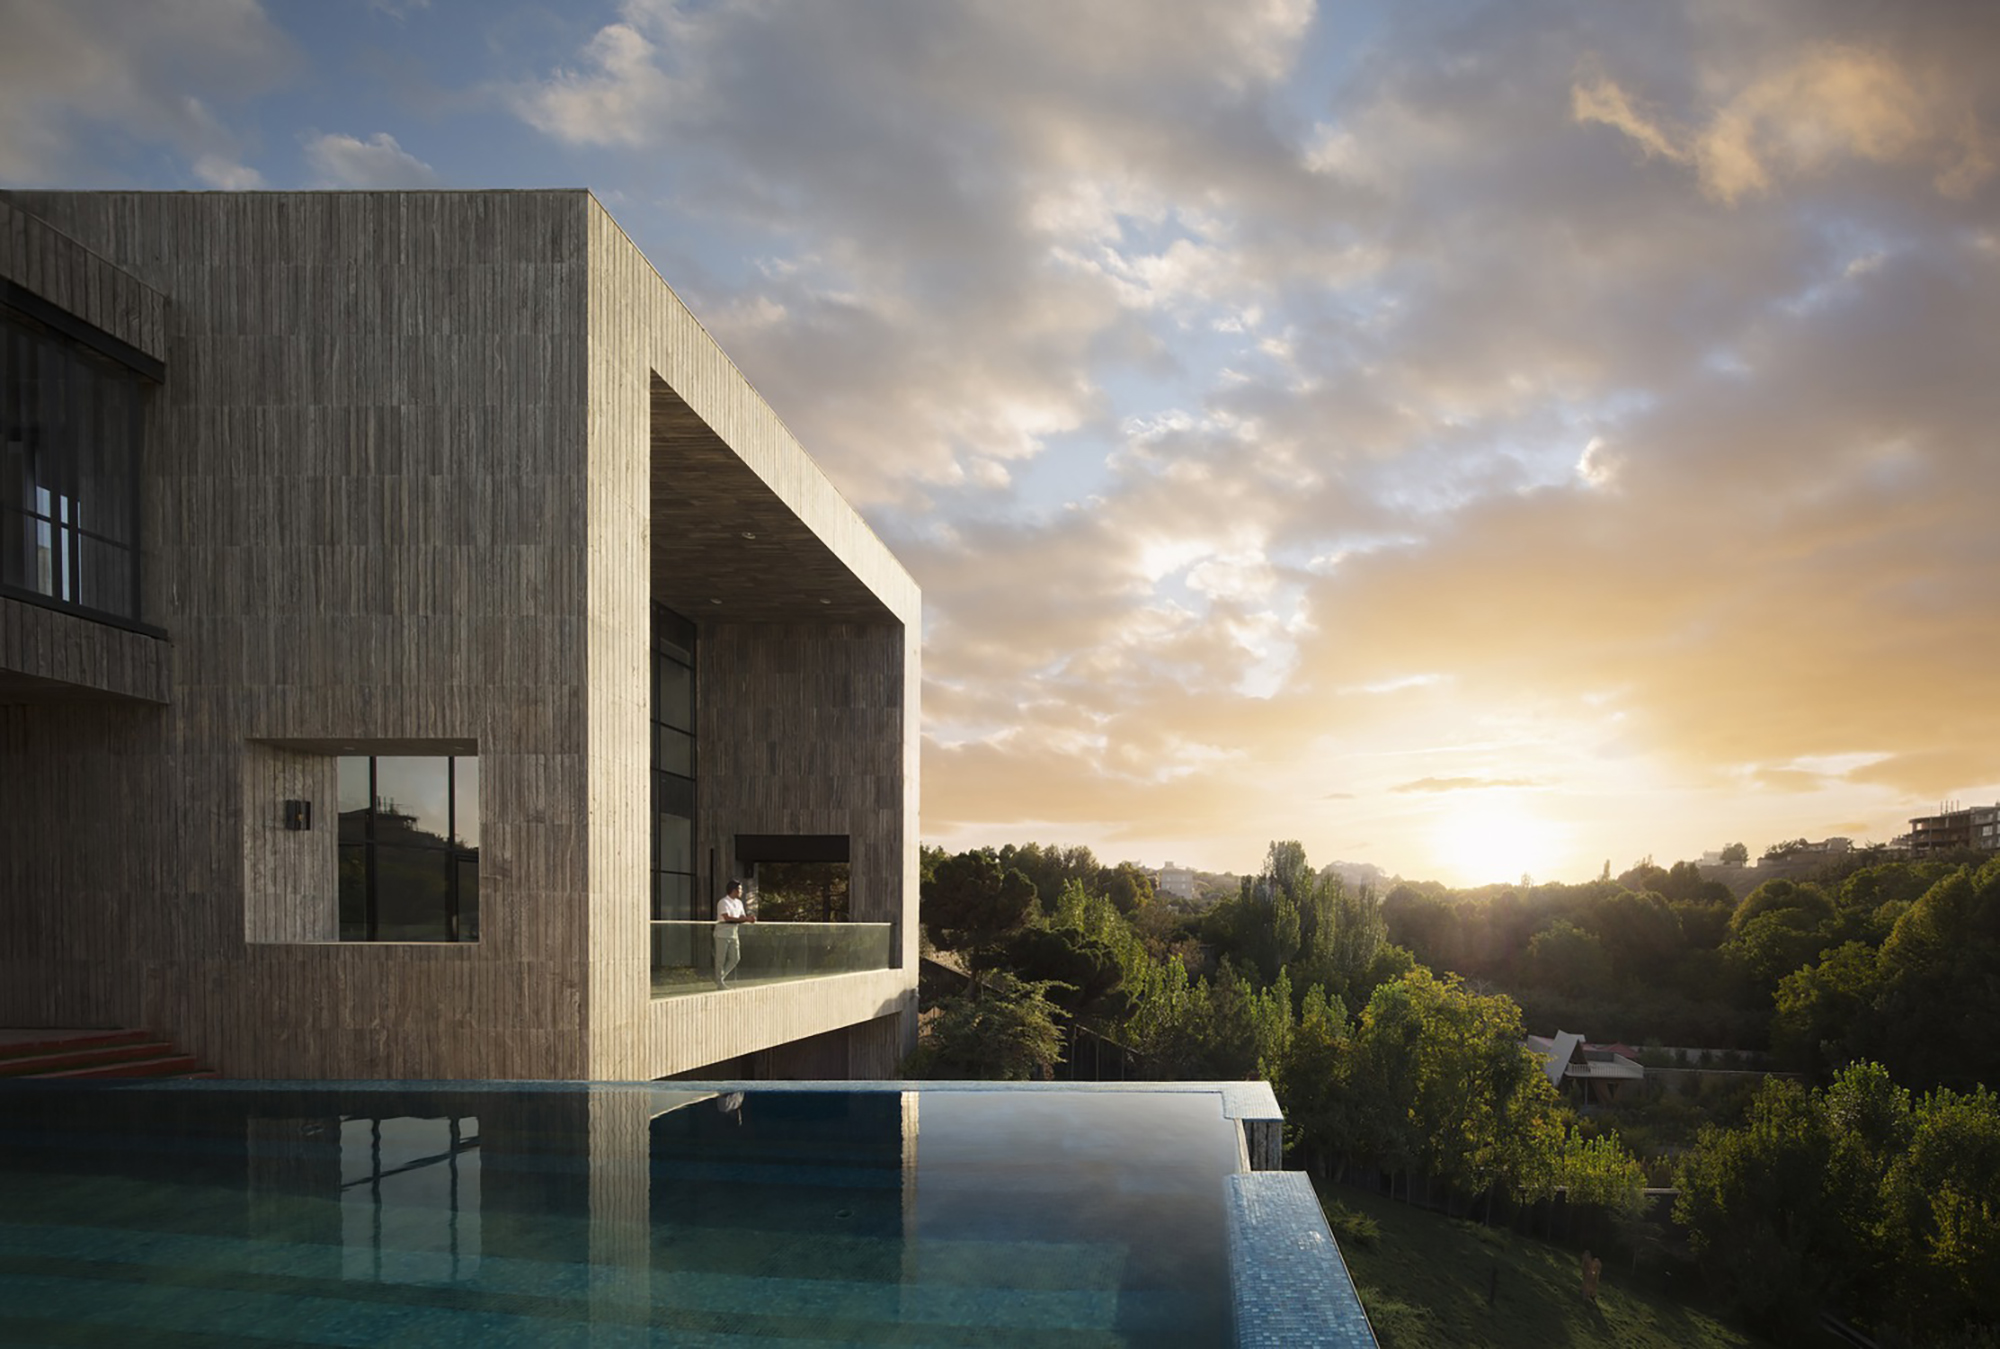 Villa Hesar design by Afshin Khosravian and Associates